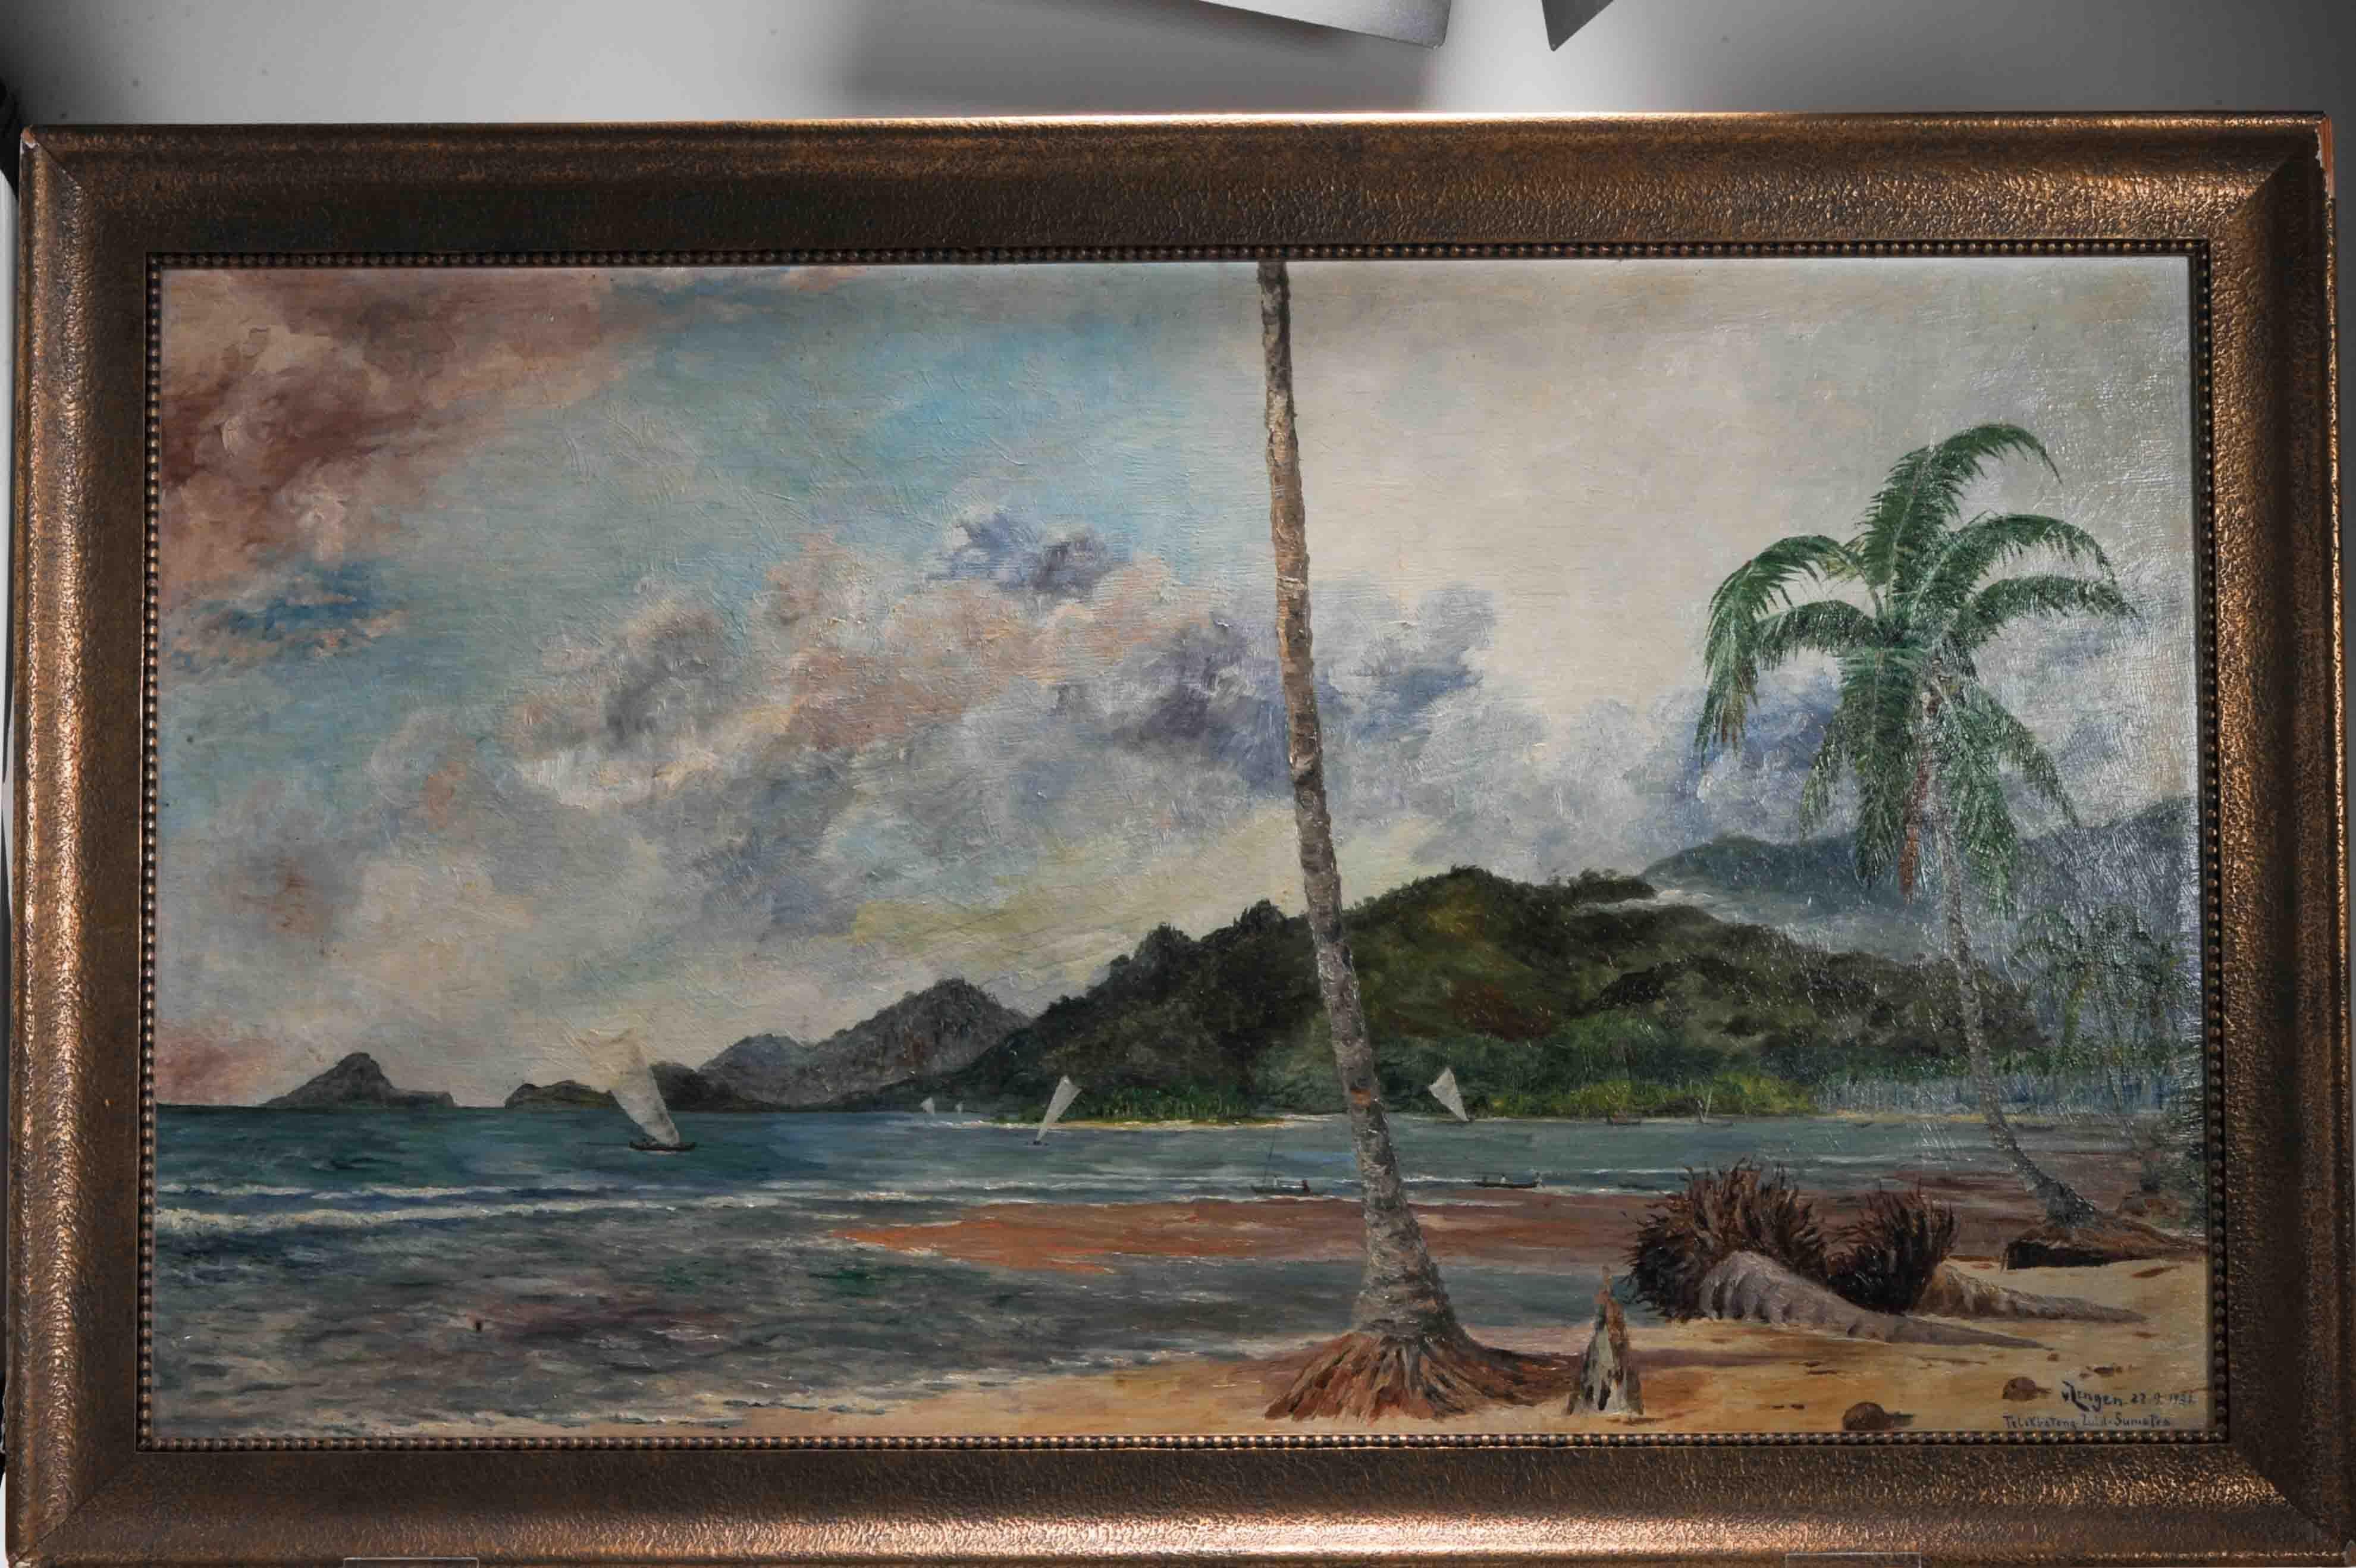 Edo Antique Painting Indonesia 1931 Sumatra Telok betong Sea Landscape Van Zengen For Sale